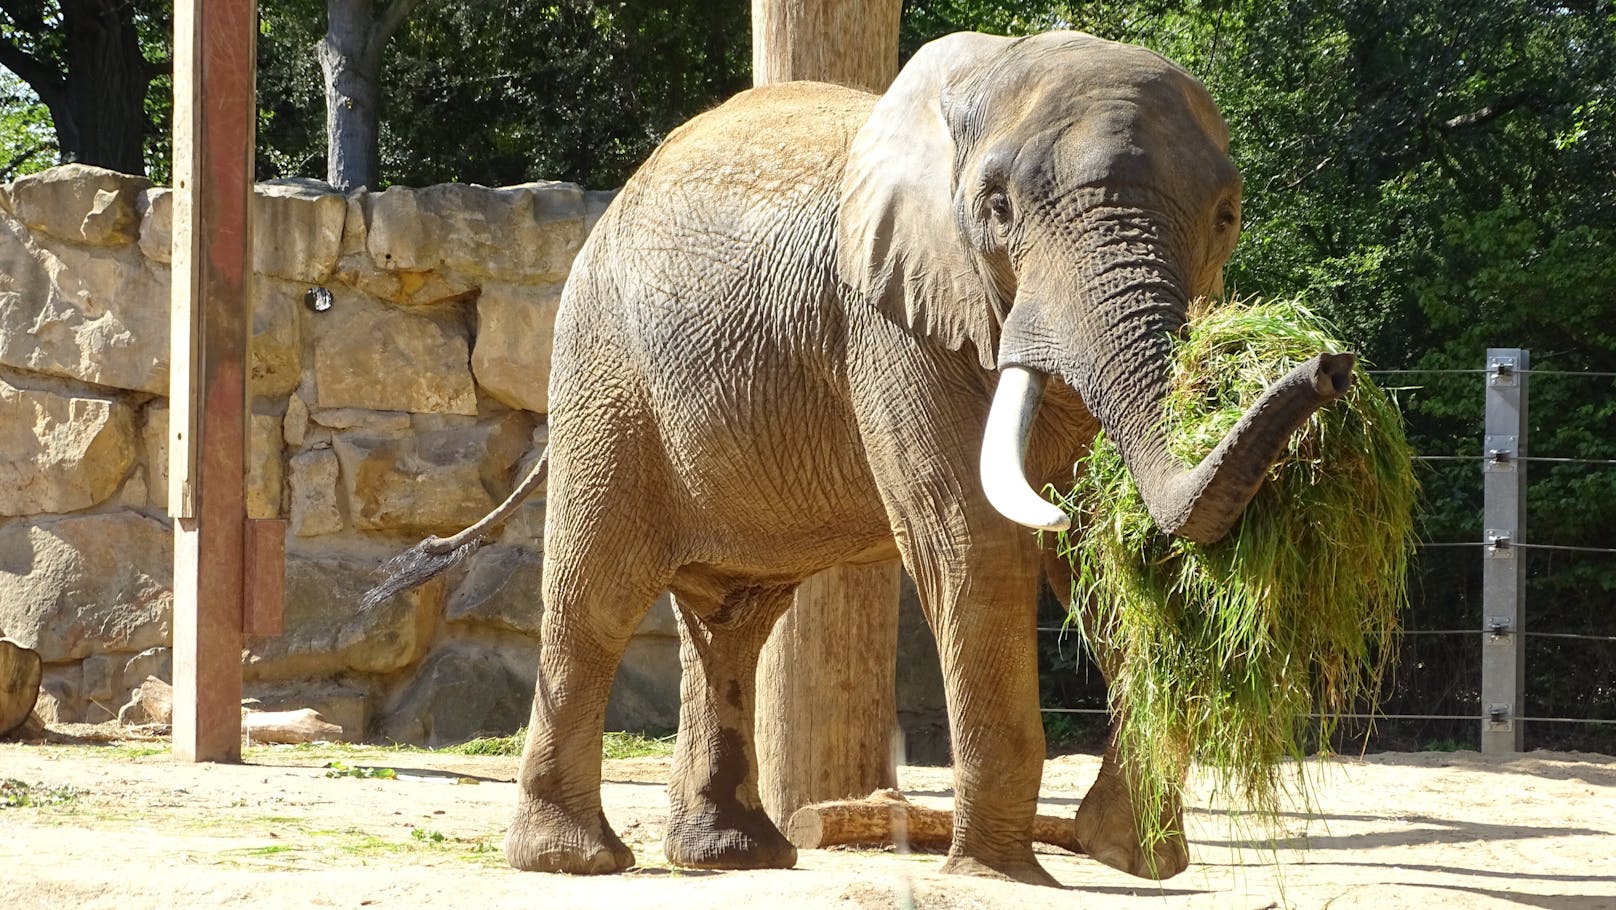 Wiener Elefanten sollen Deutschen liebesfit machen